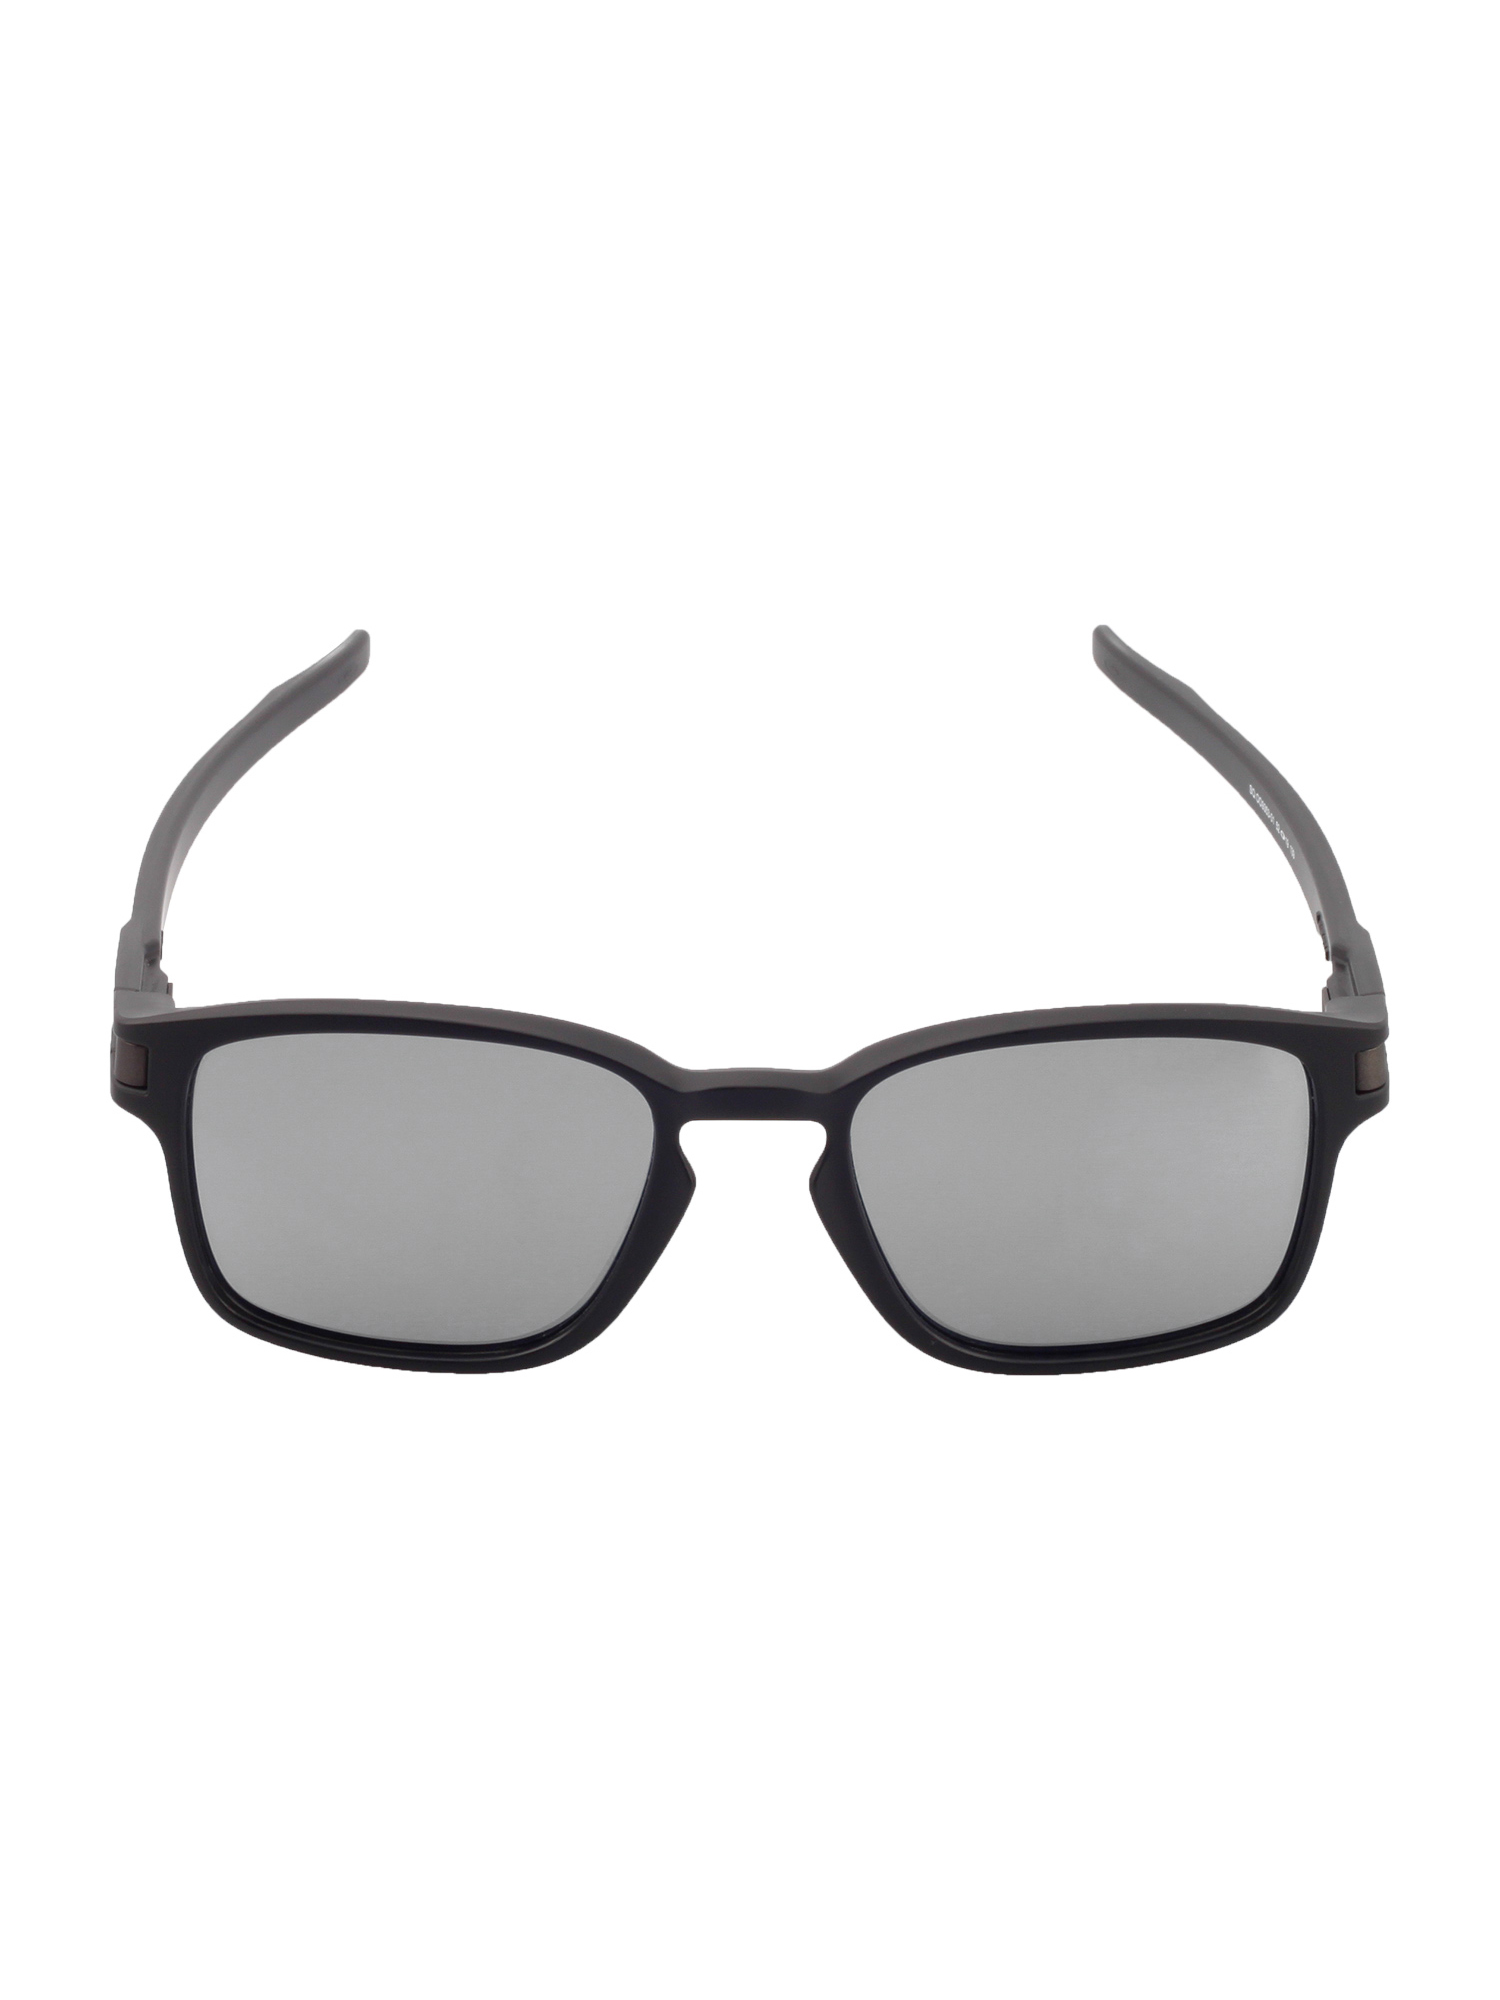 Walleva Polarized Titanium + Black Replacement Lenses For Oakley Latch SQ Sunglasses - image 3 of 6